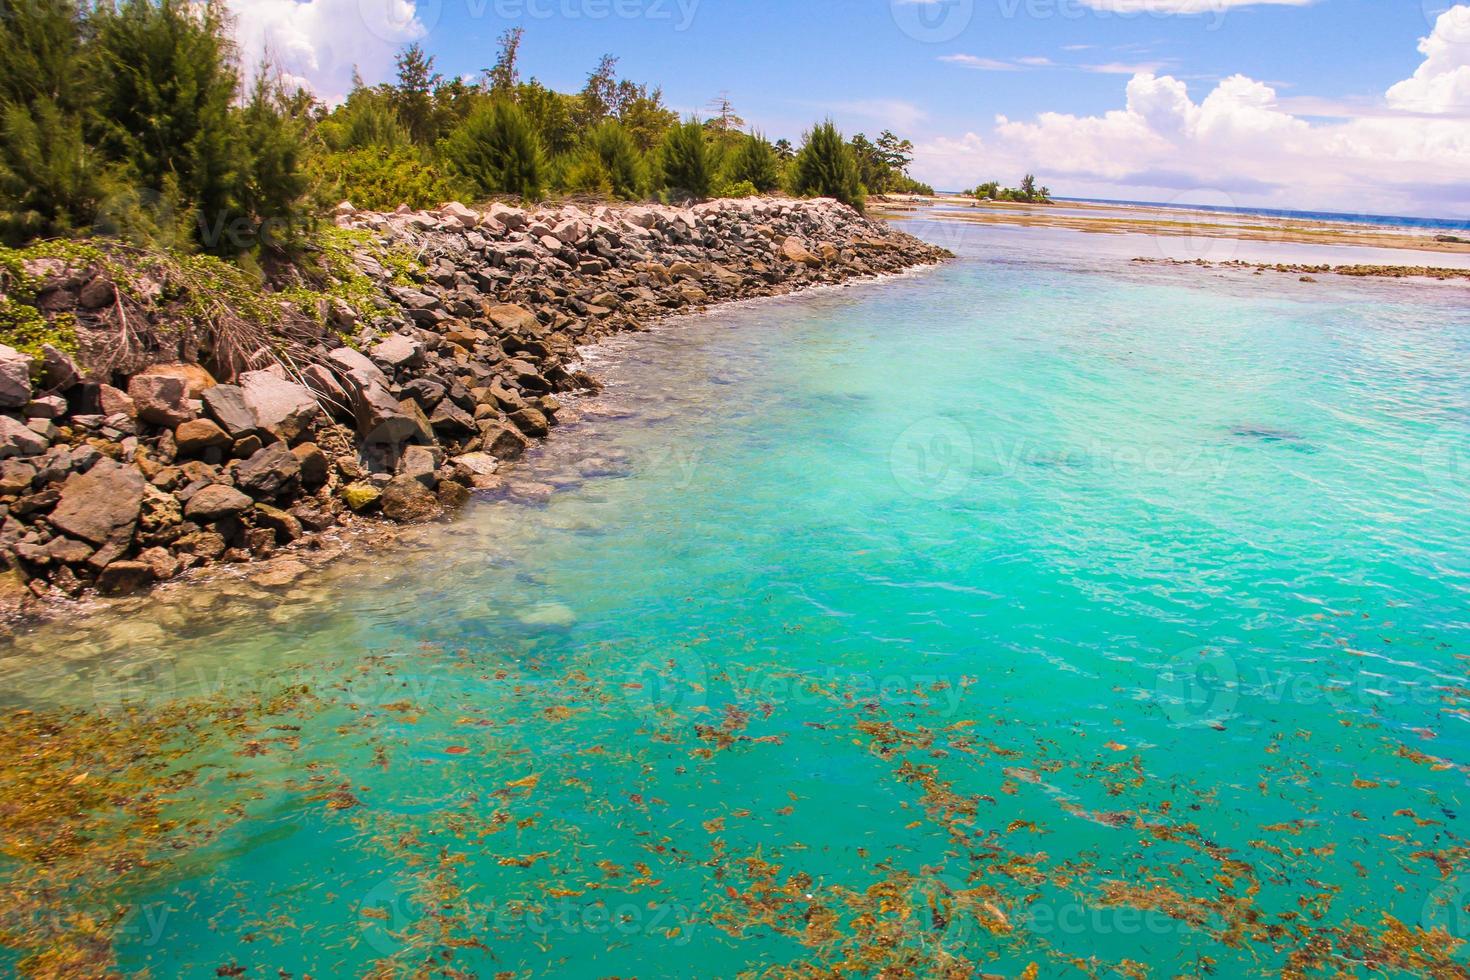 lagoa exótica turquesa em seychelles foto